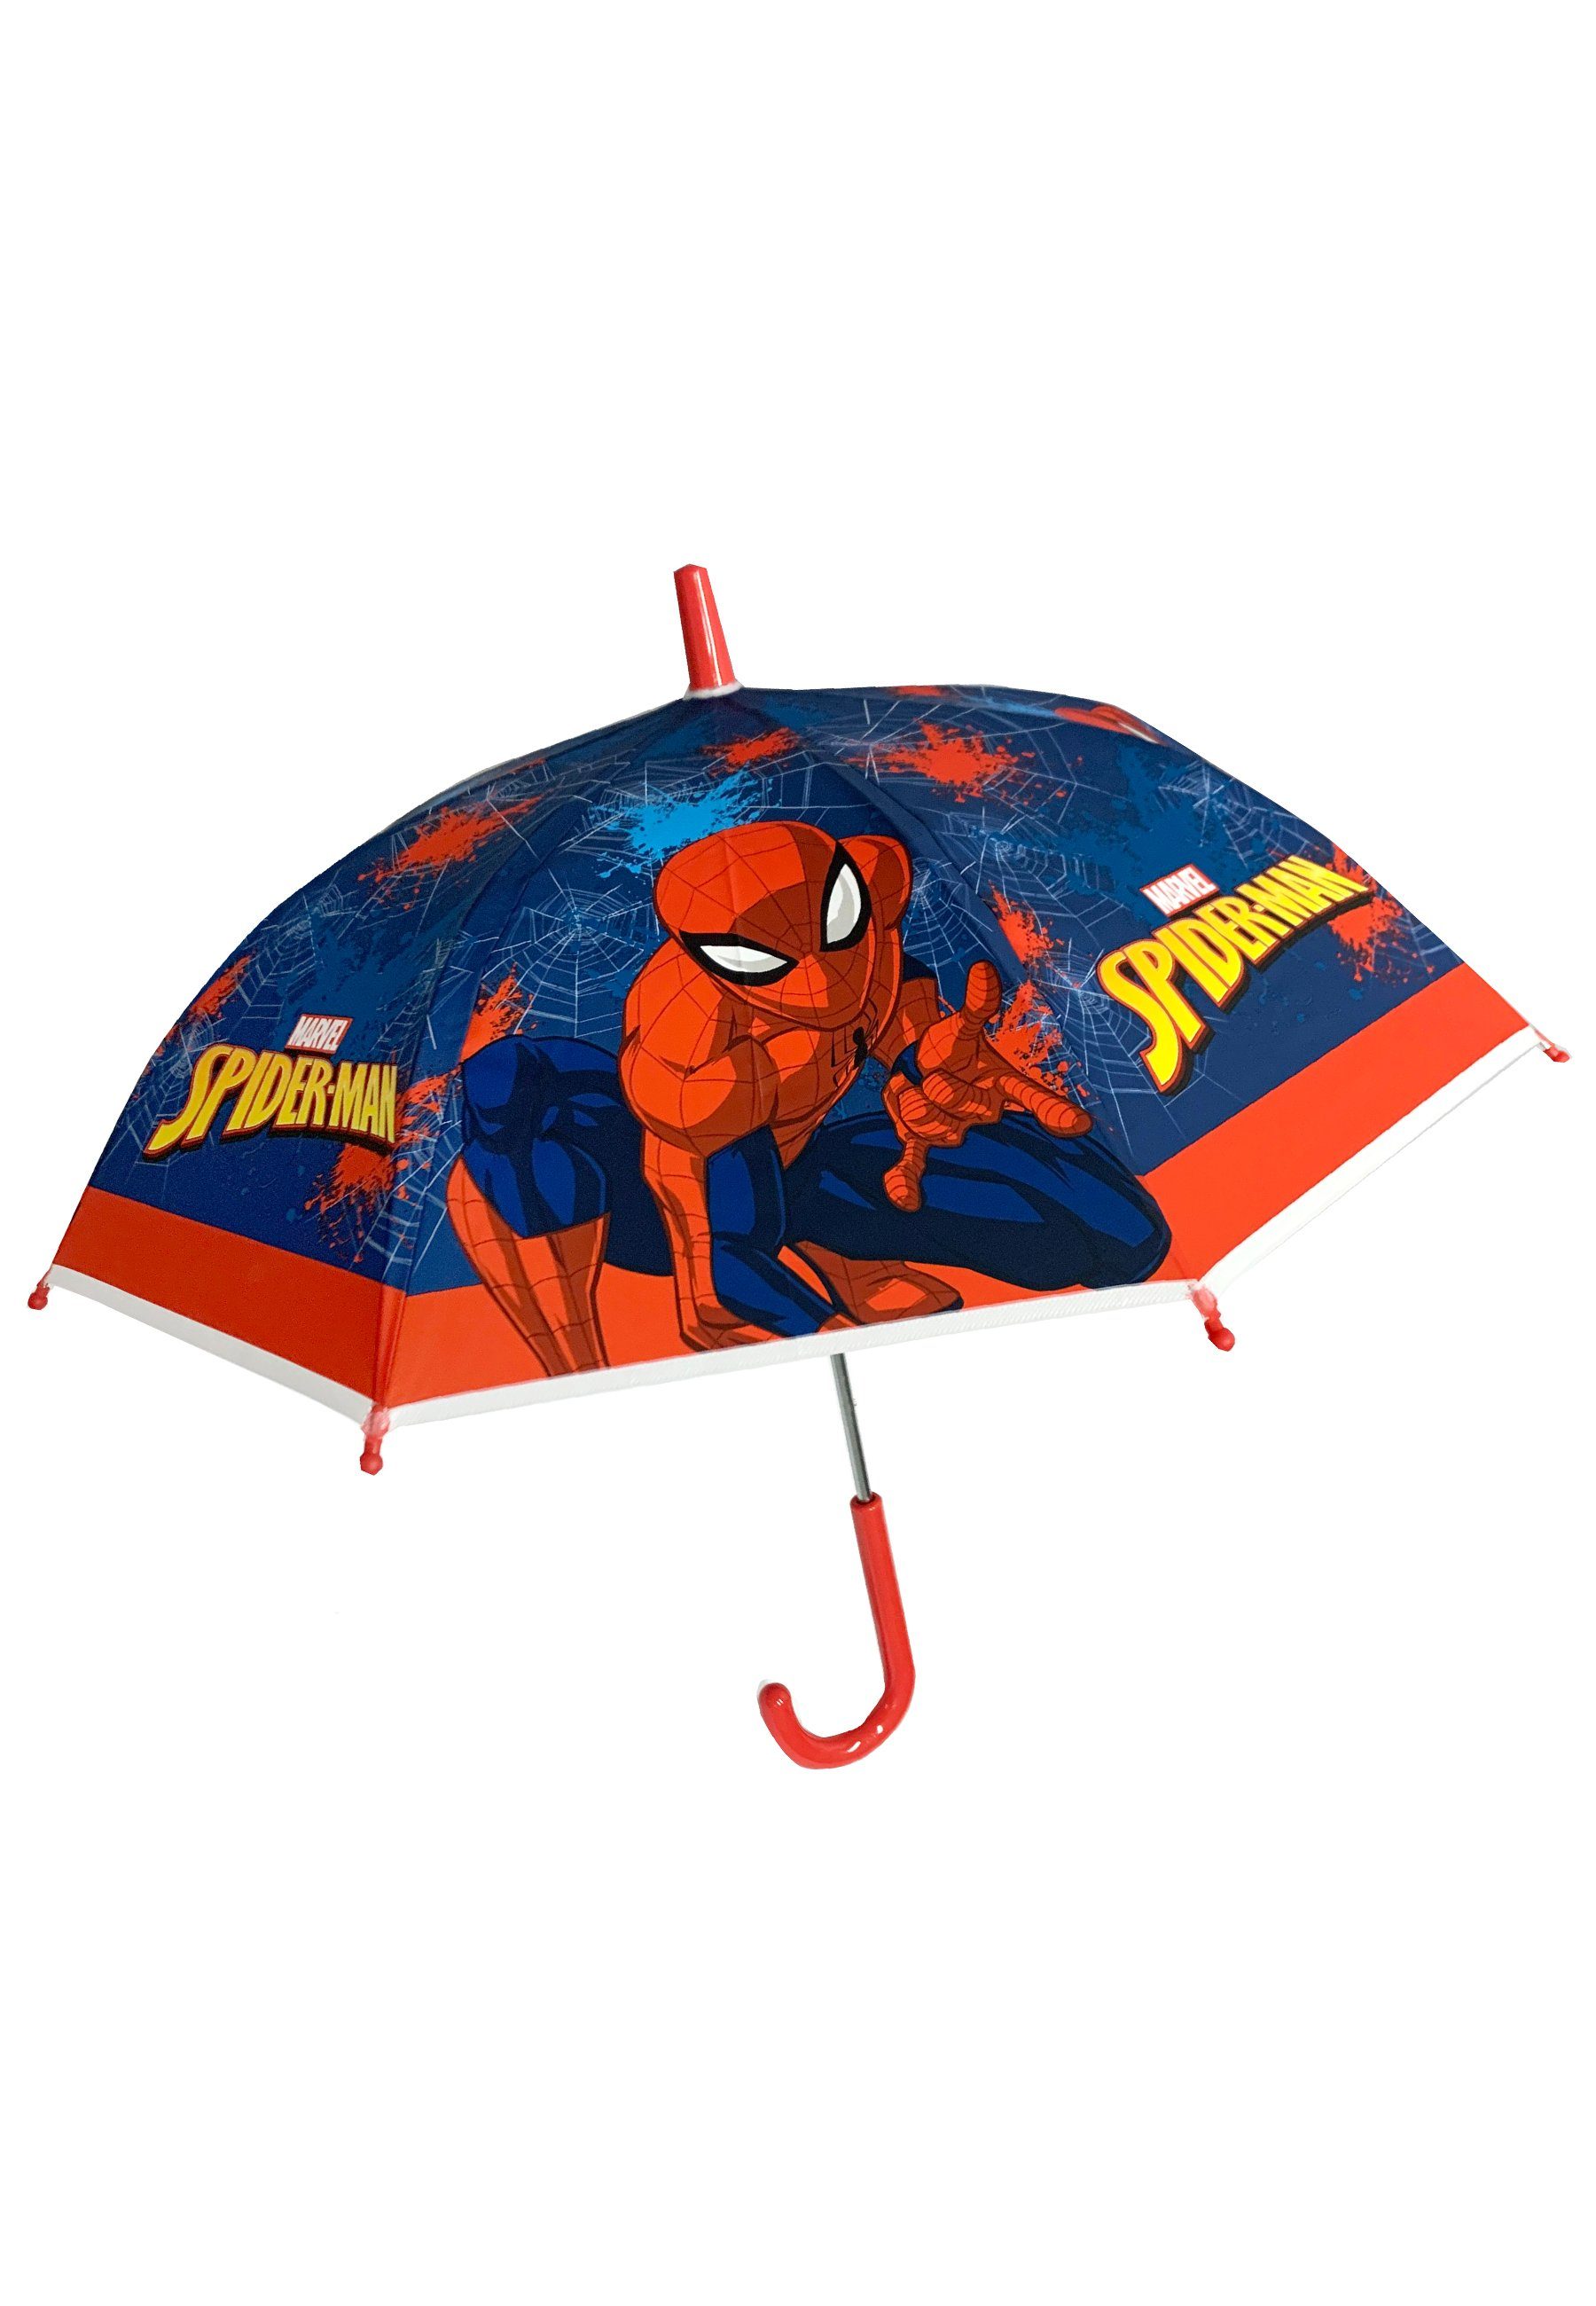 Spiderman Stockregenschirm Kinder Jungen Stock-Schirm Kuppelschirm, Art:  Stock-Regenschirm Kuppelschirm, Mechanismus: Manuell